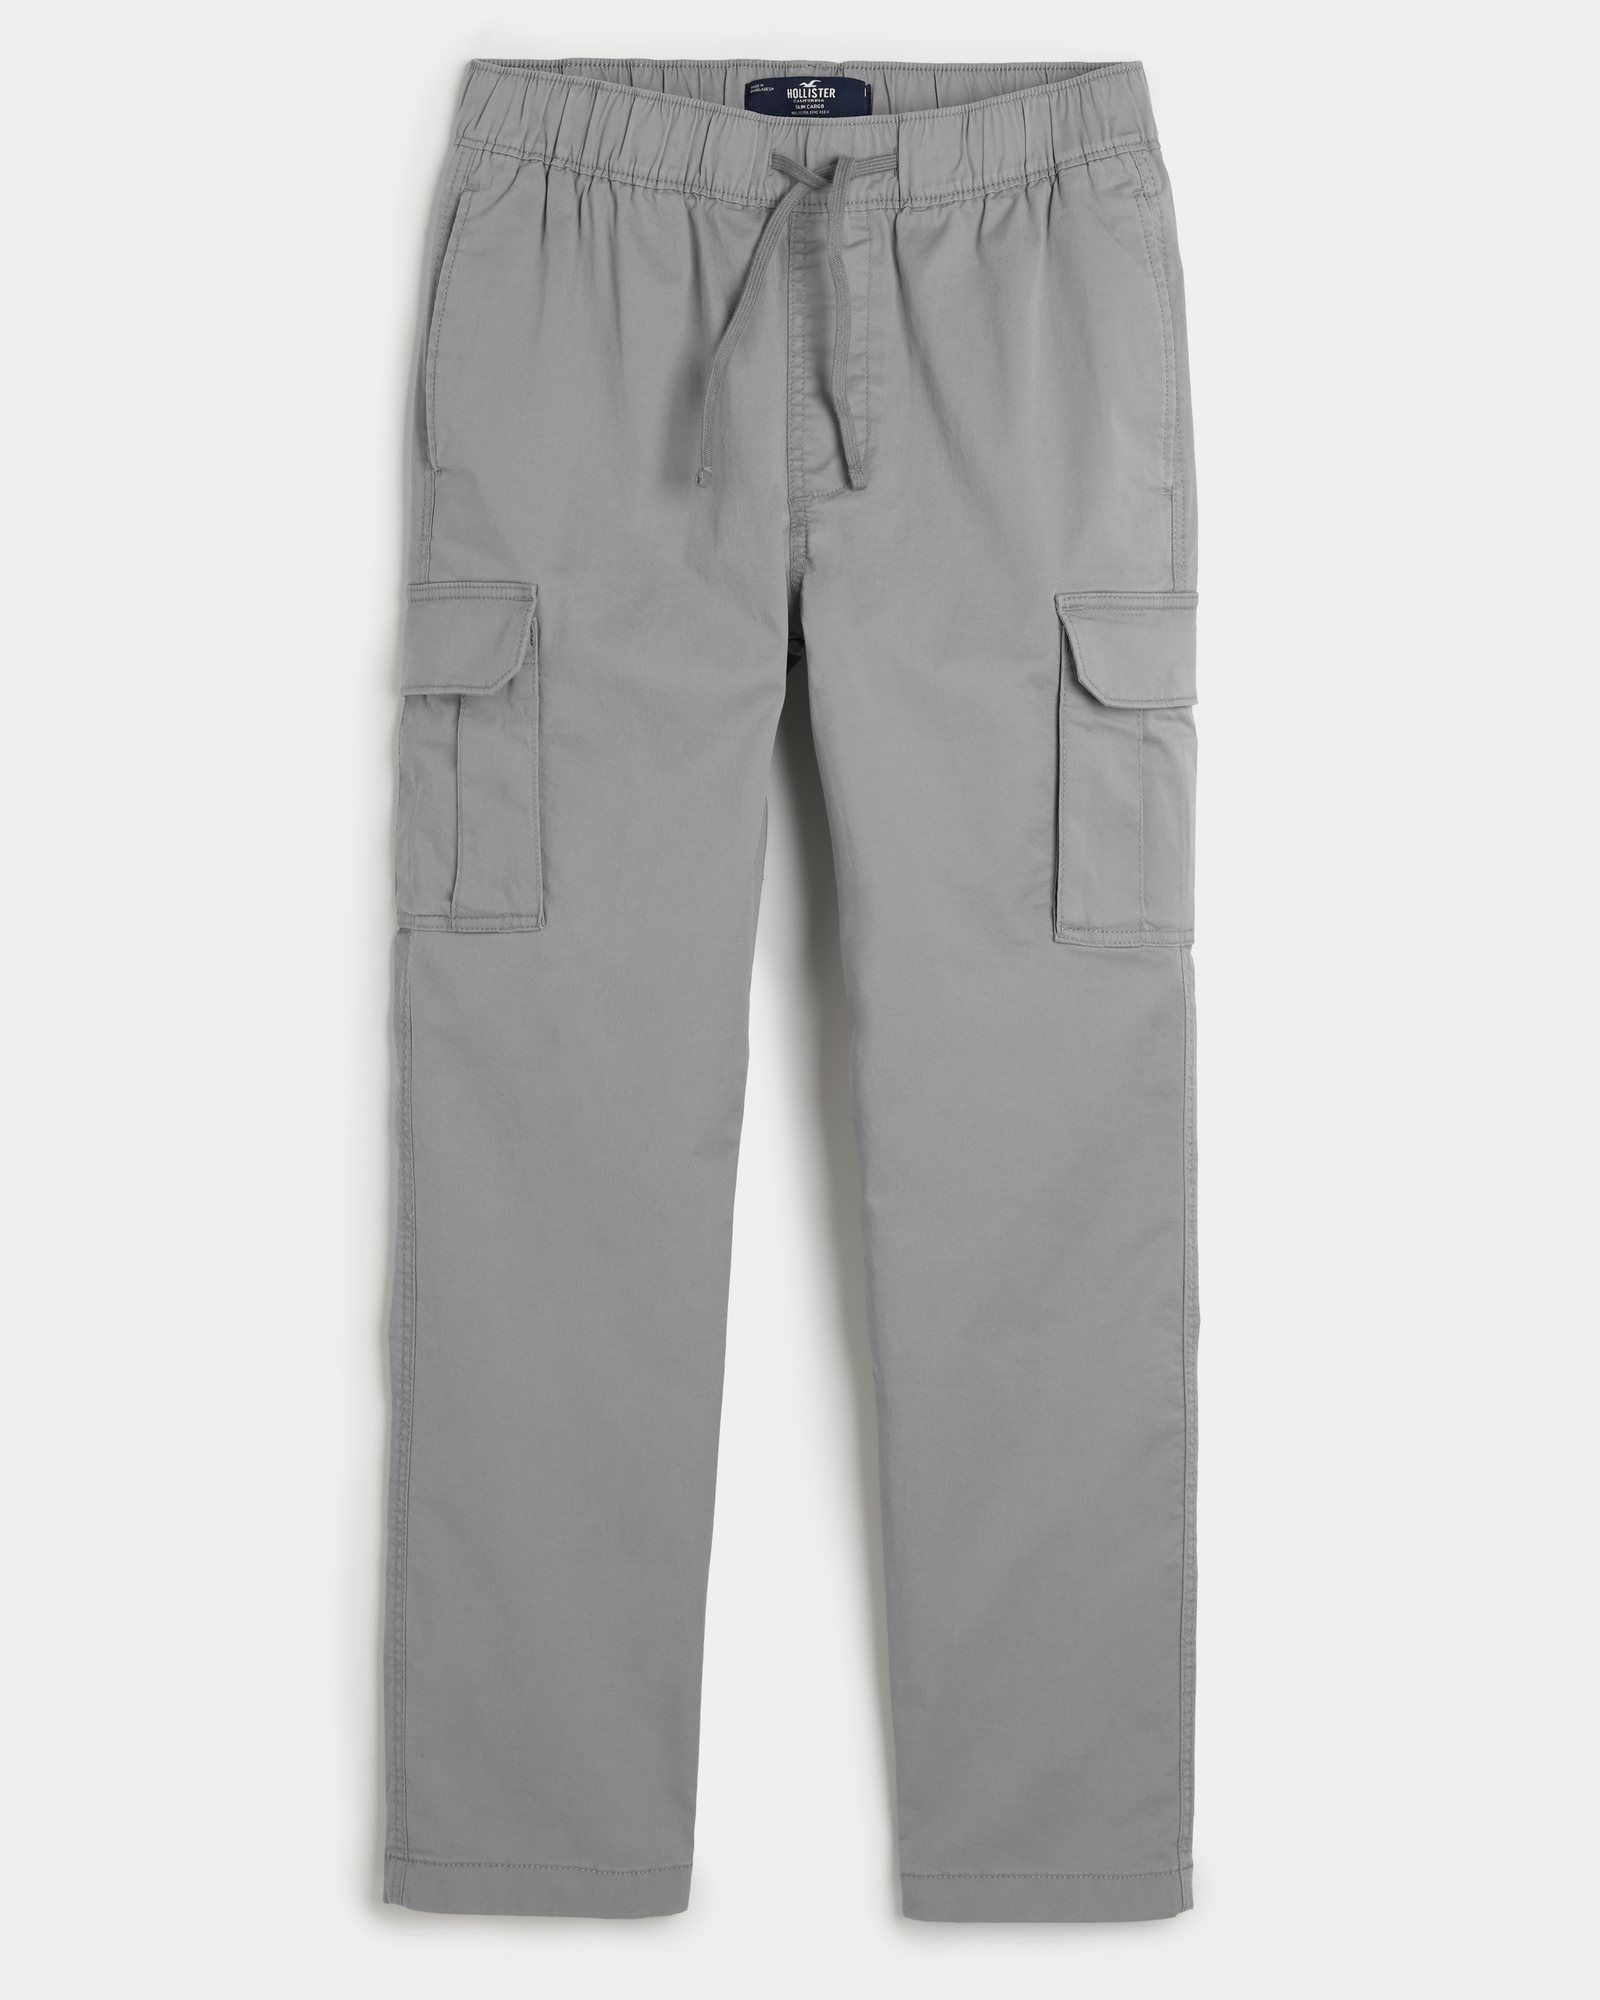 Hollister front pocket skinny fit cargo sweatpants in dark gray